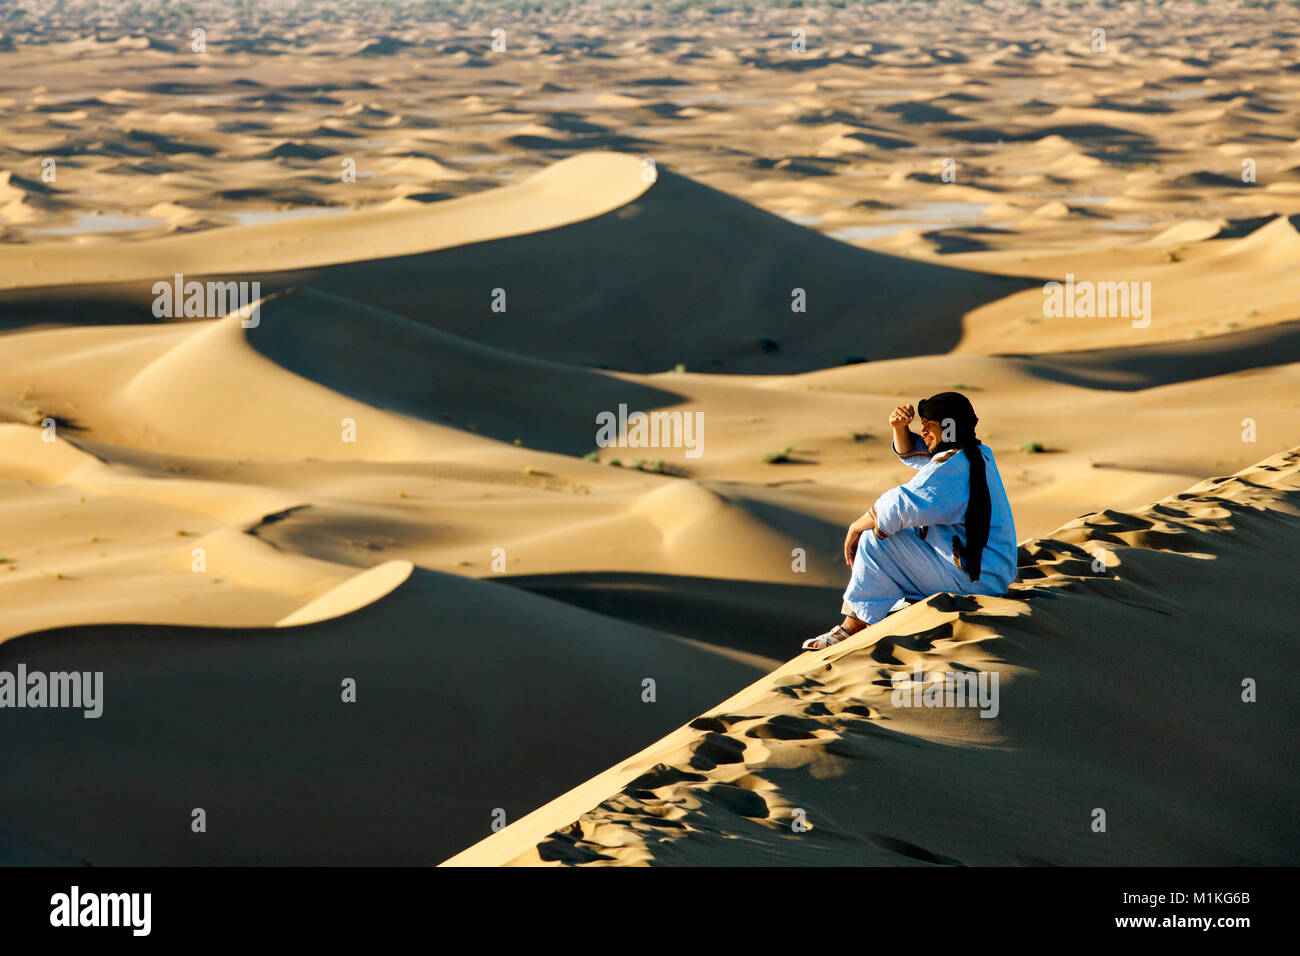 Morocco, Mhamid, Erg Chigaga sand dunes. Sahara desert. Local Berber man on sand dune. Stock Photo